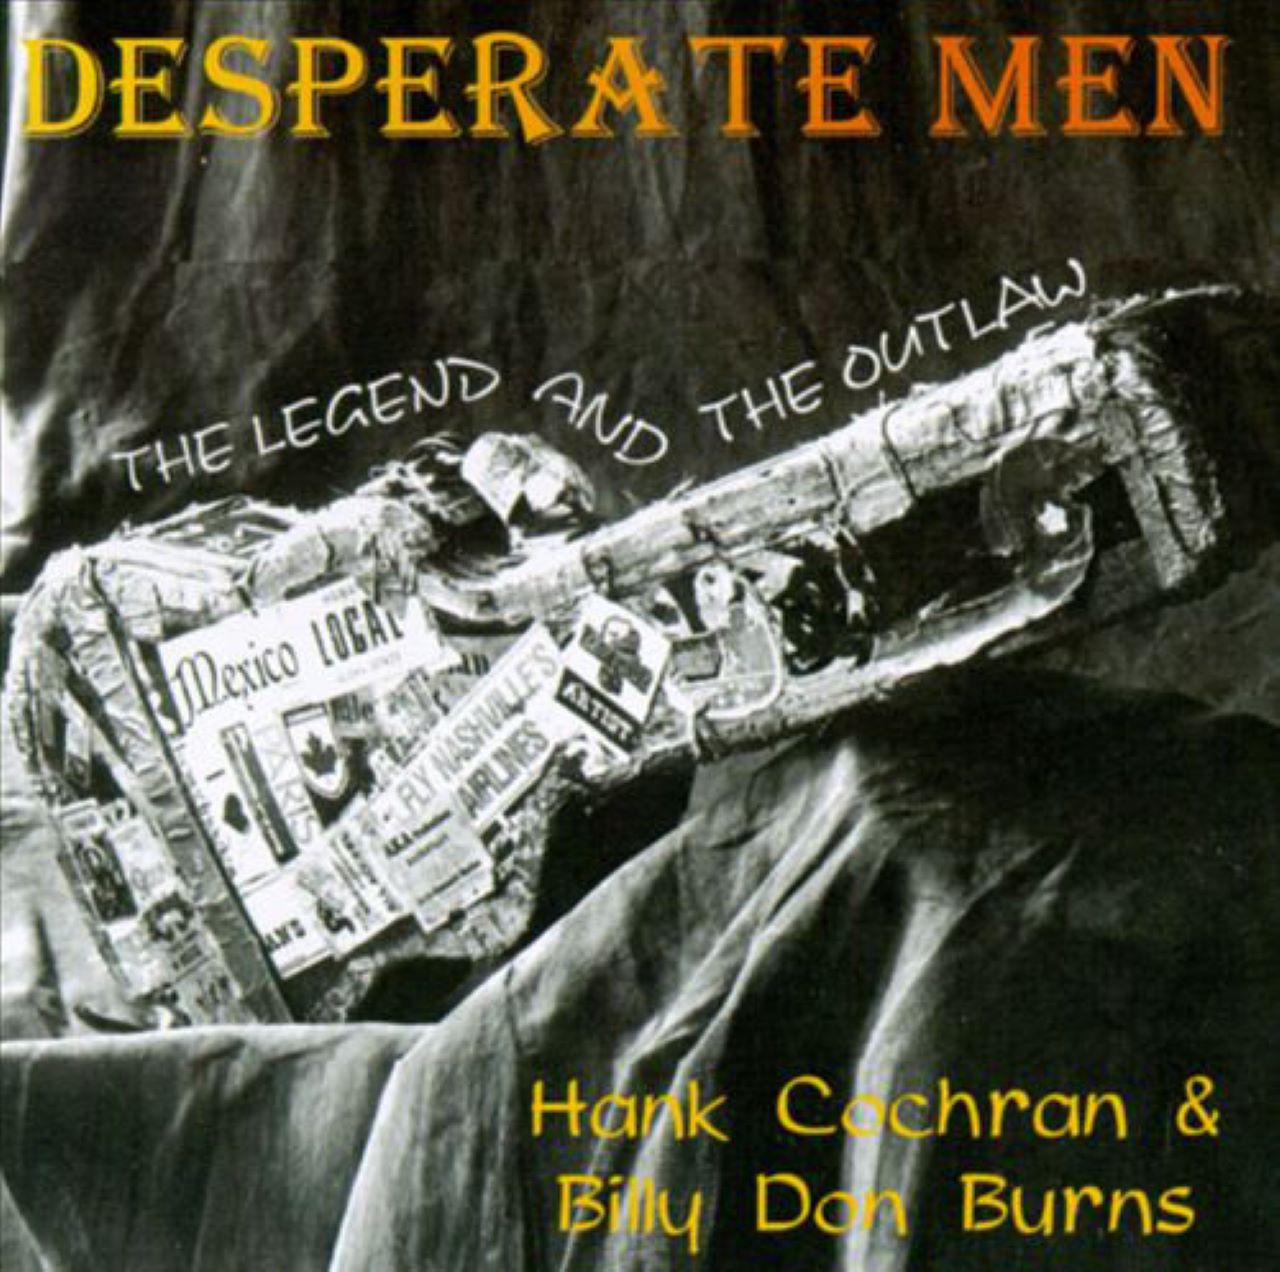 Hank Cochran & Billy Don Burns - Desperate Men cover album